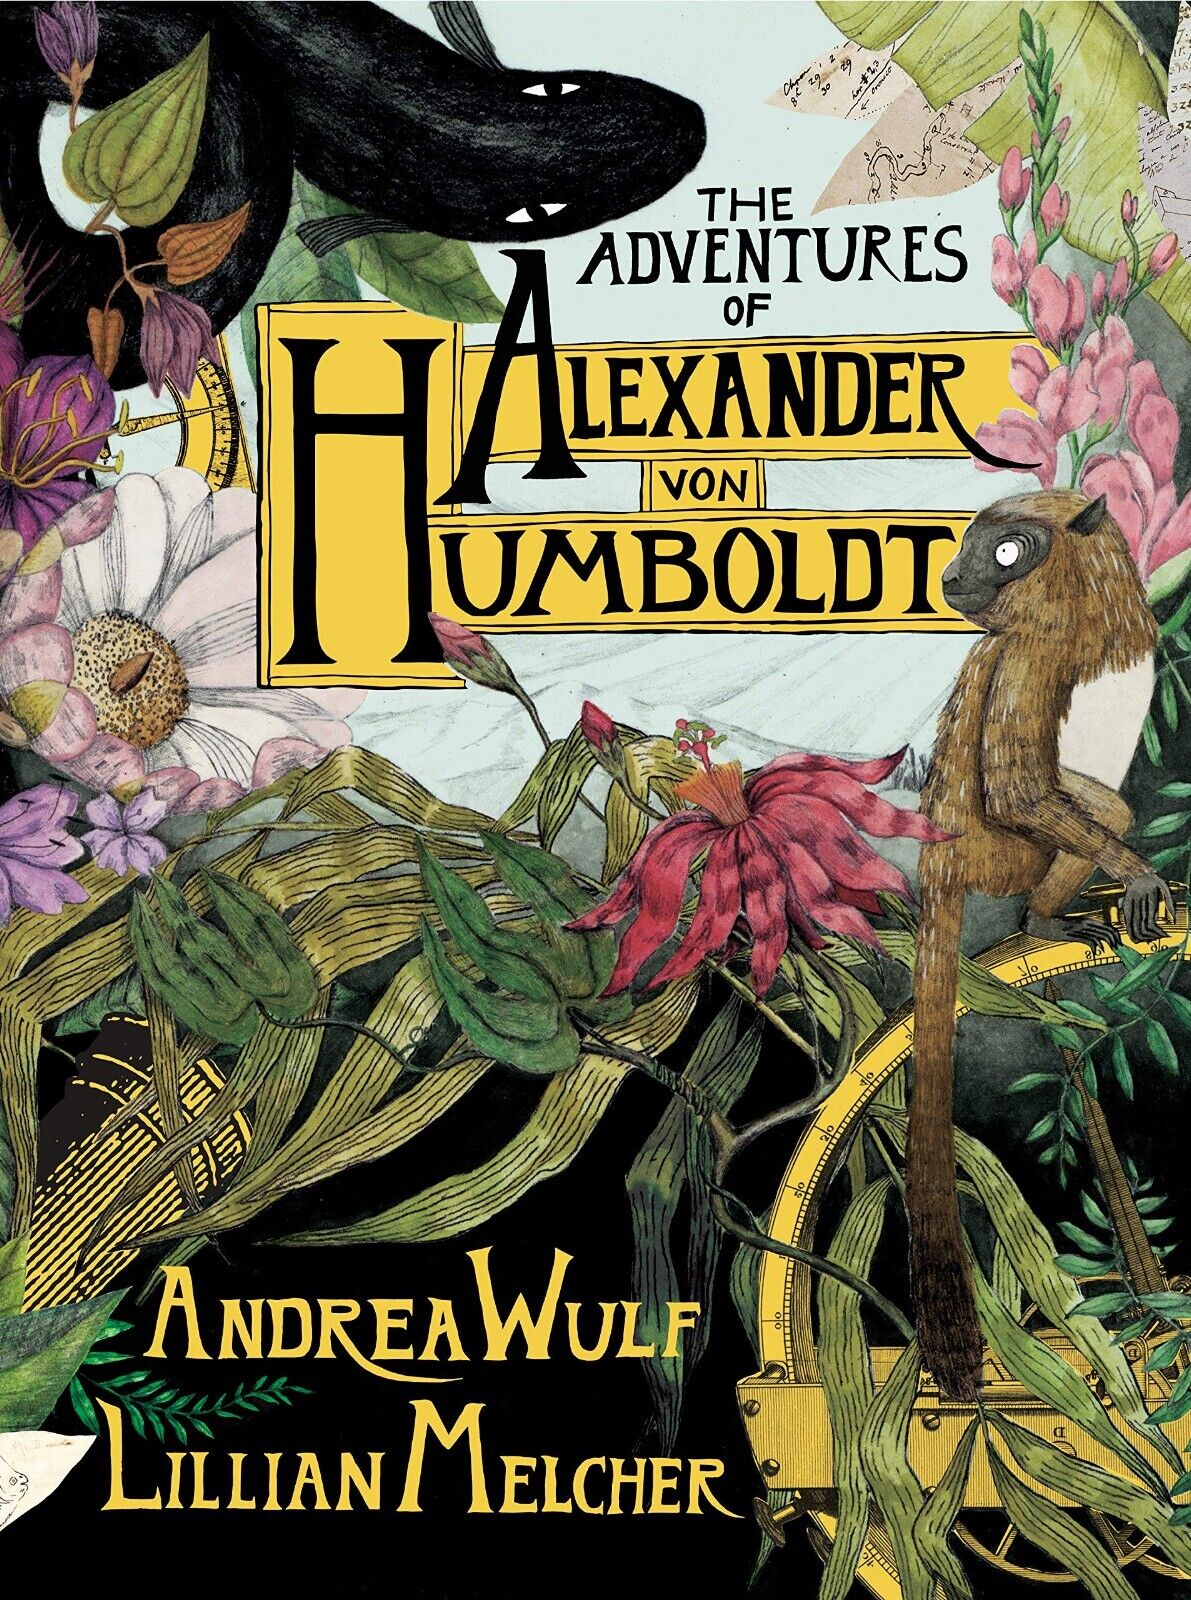 The Adventures of Alexander Von Humboldt Pantheon, 2019 ILLUSTRATED